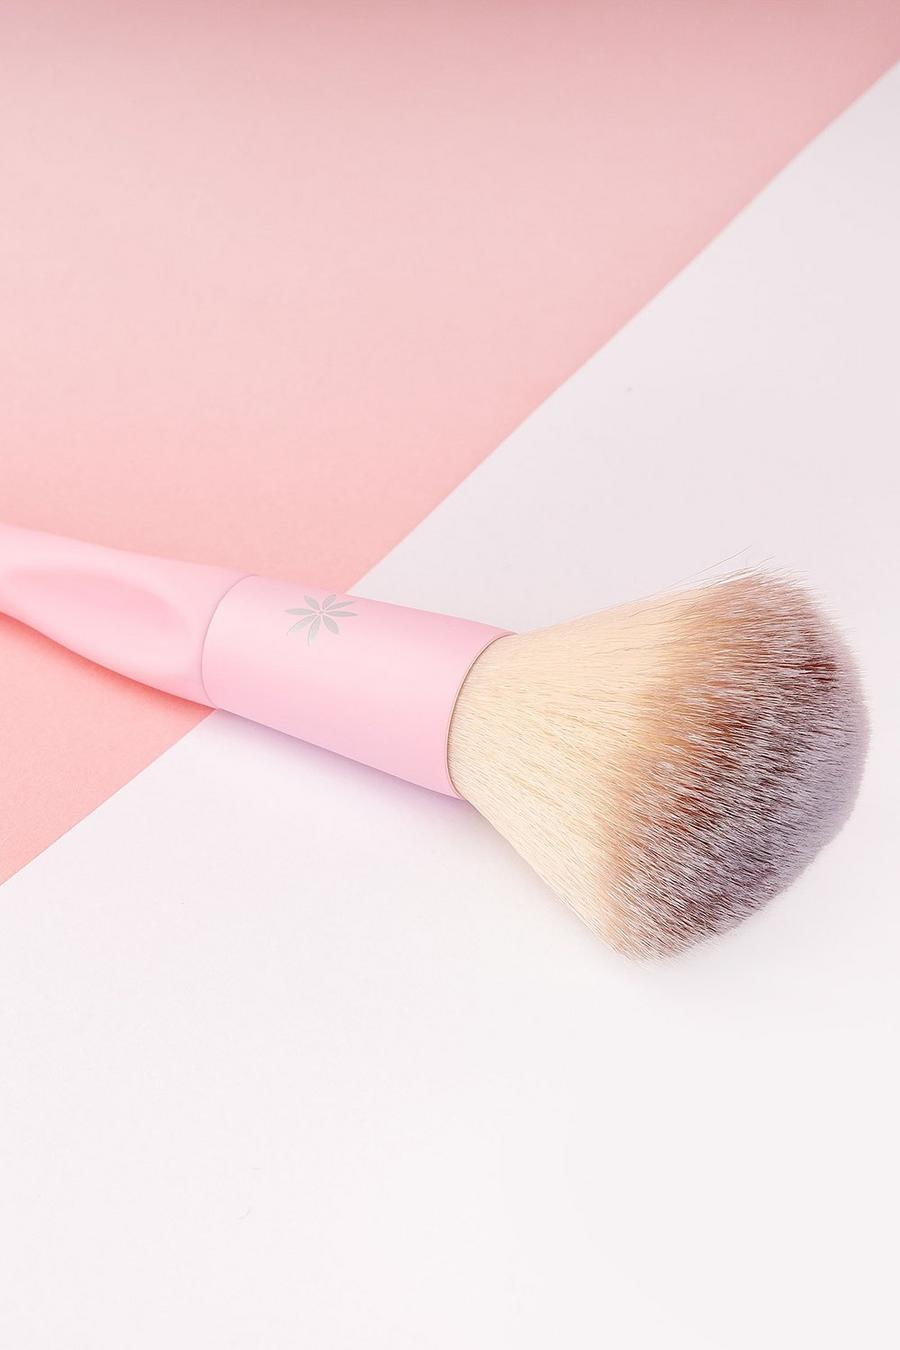 Brushworks Hd - Pennello da fard, Baby pink rosa